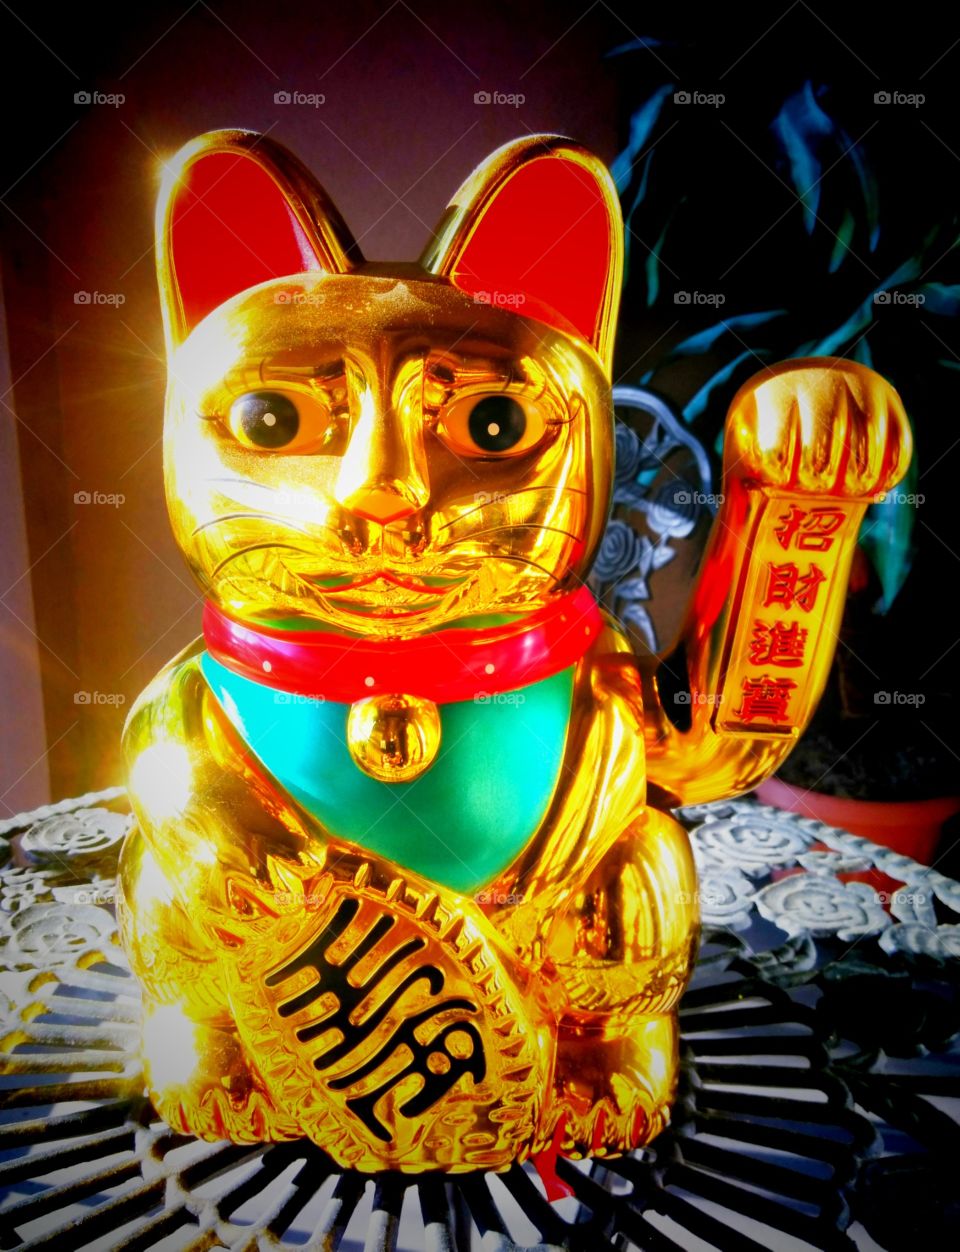 Gold Souvenir the Big Maneki Neko "Lucky Cat"